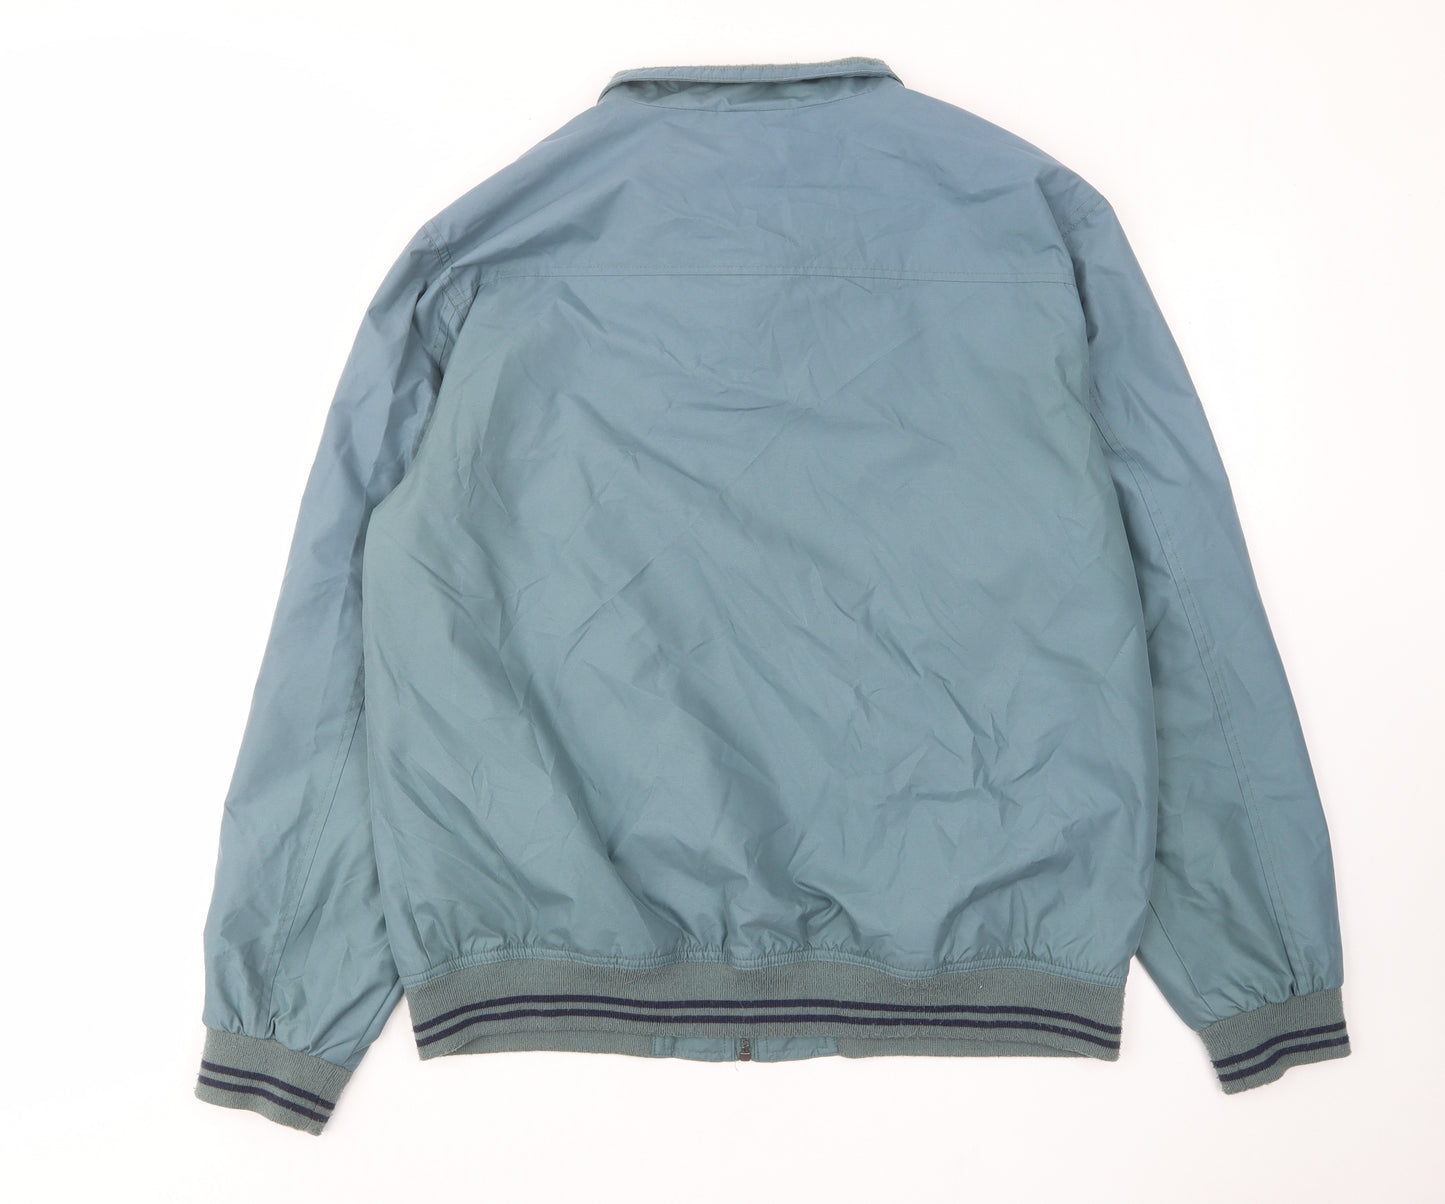 James Pringle Mens Green Bomber Jacket Jacket Size L Zip - Zip Pockets